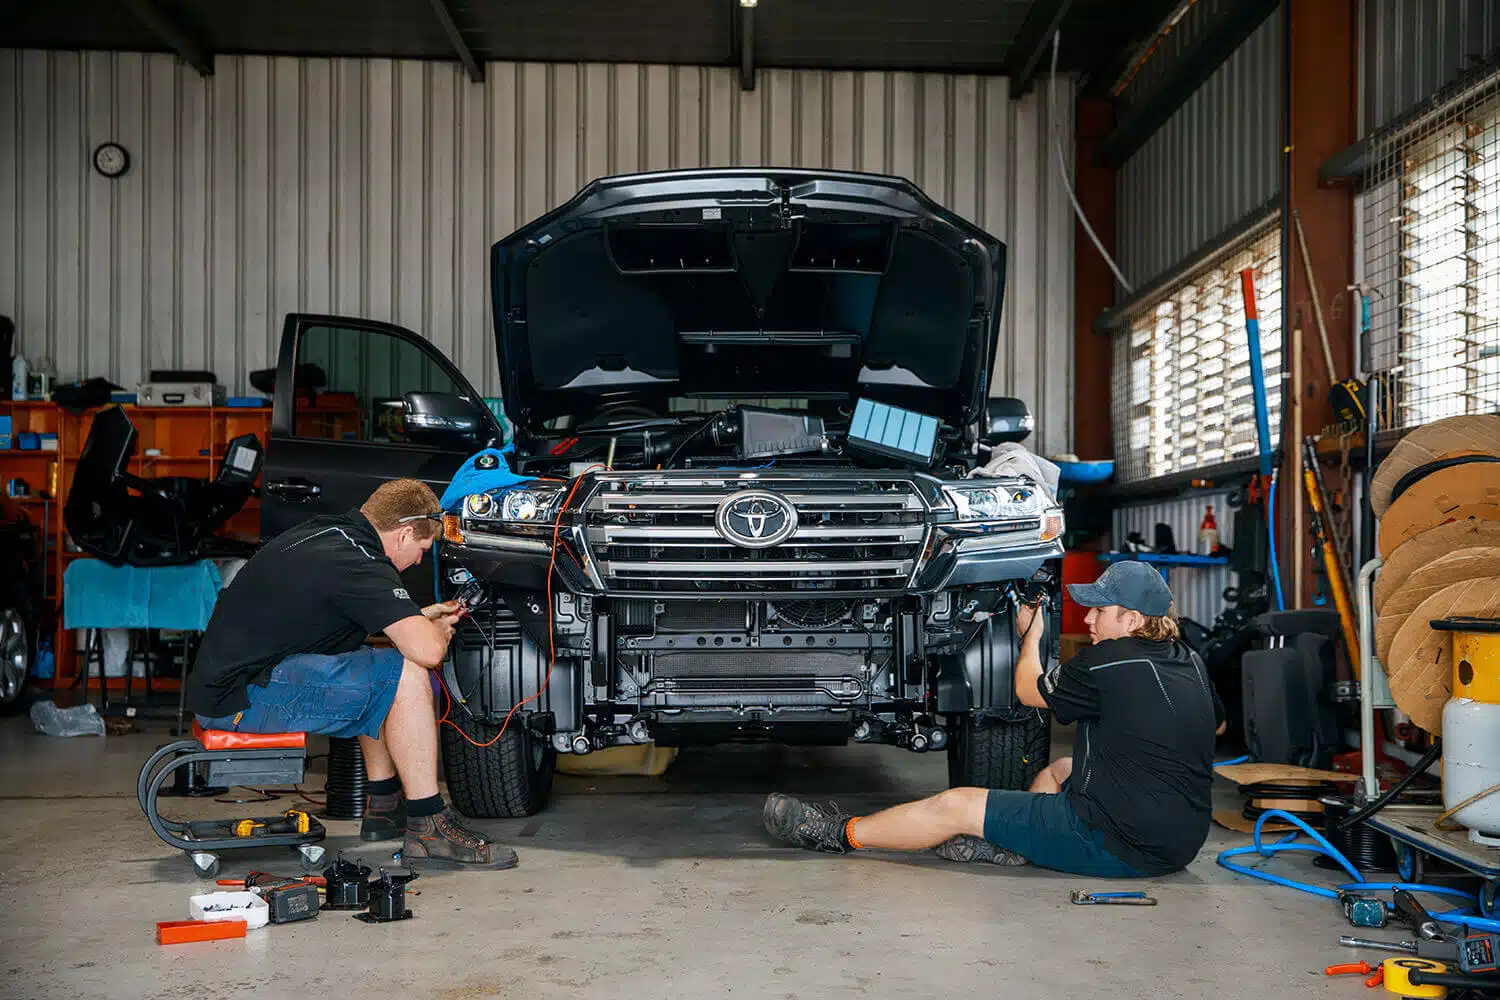 Teamwork makes the dream work: Mechanics collaborating on a car repair